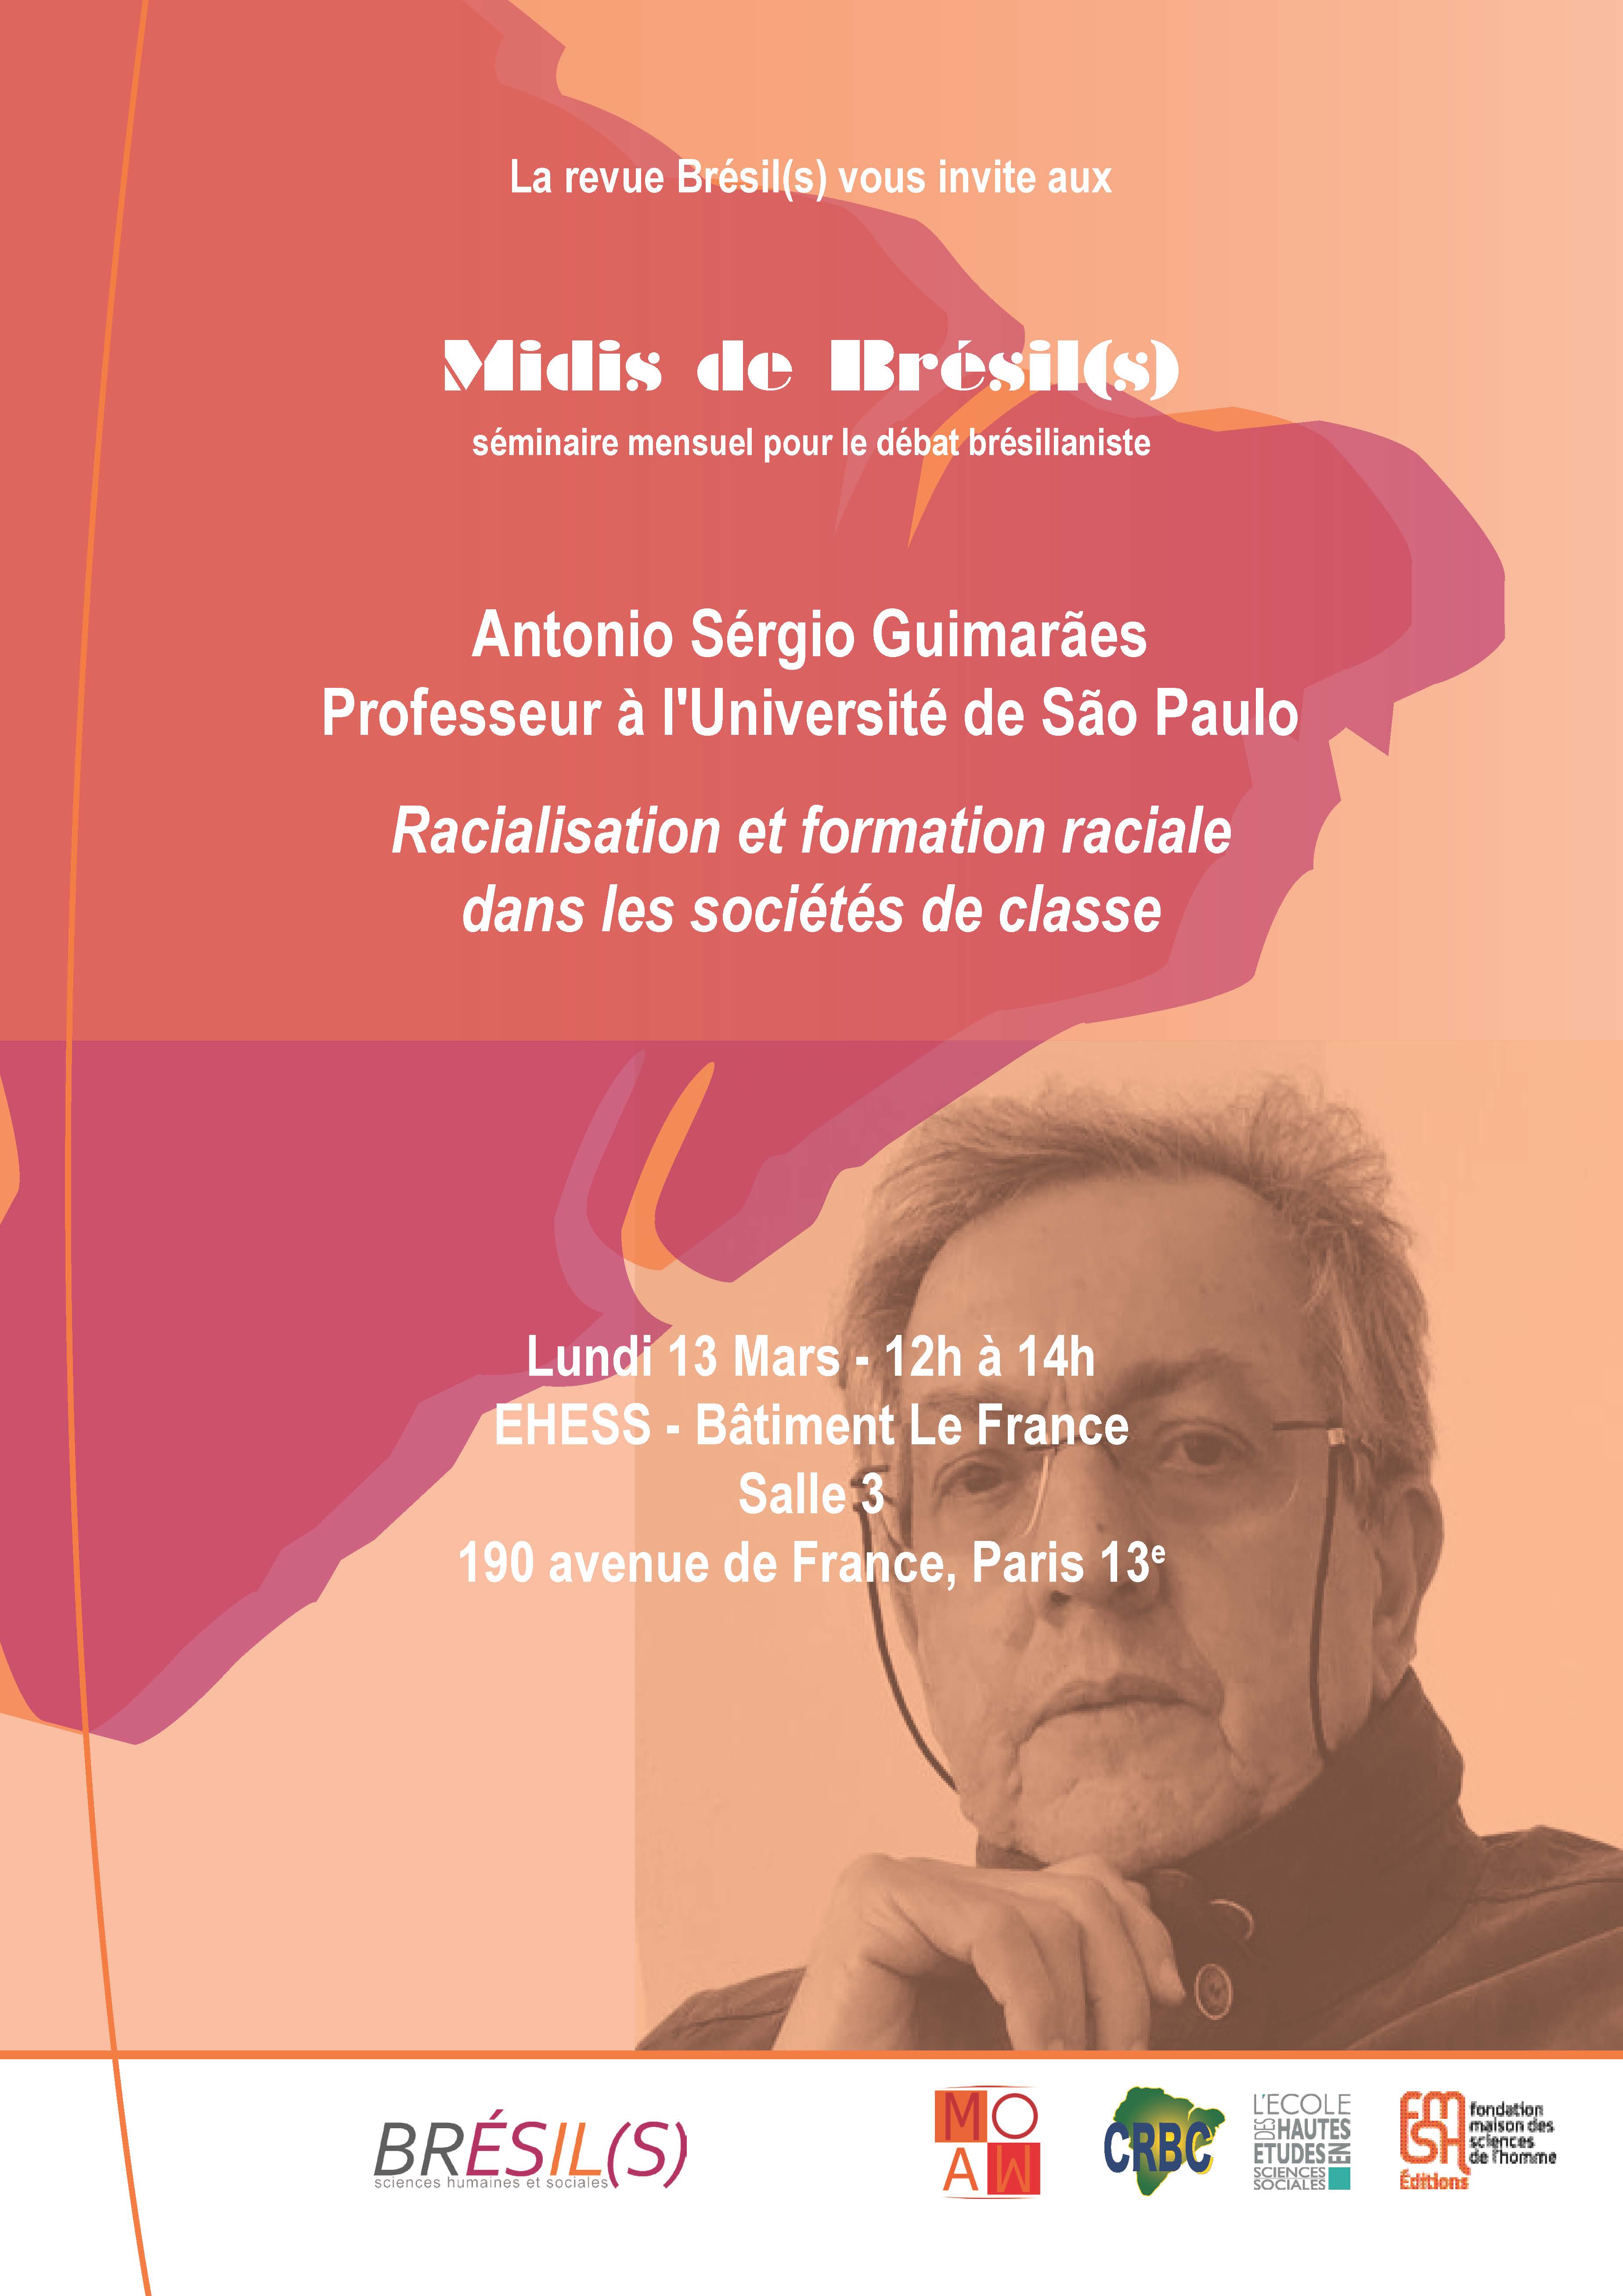 Les Midis de Brésil(s) - Antonio Sérgio Guimarães, professeur de l'Université de São Paulo